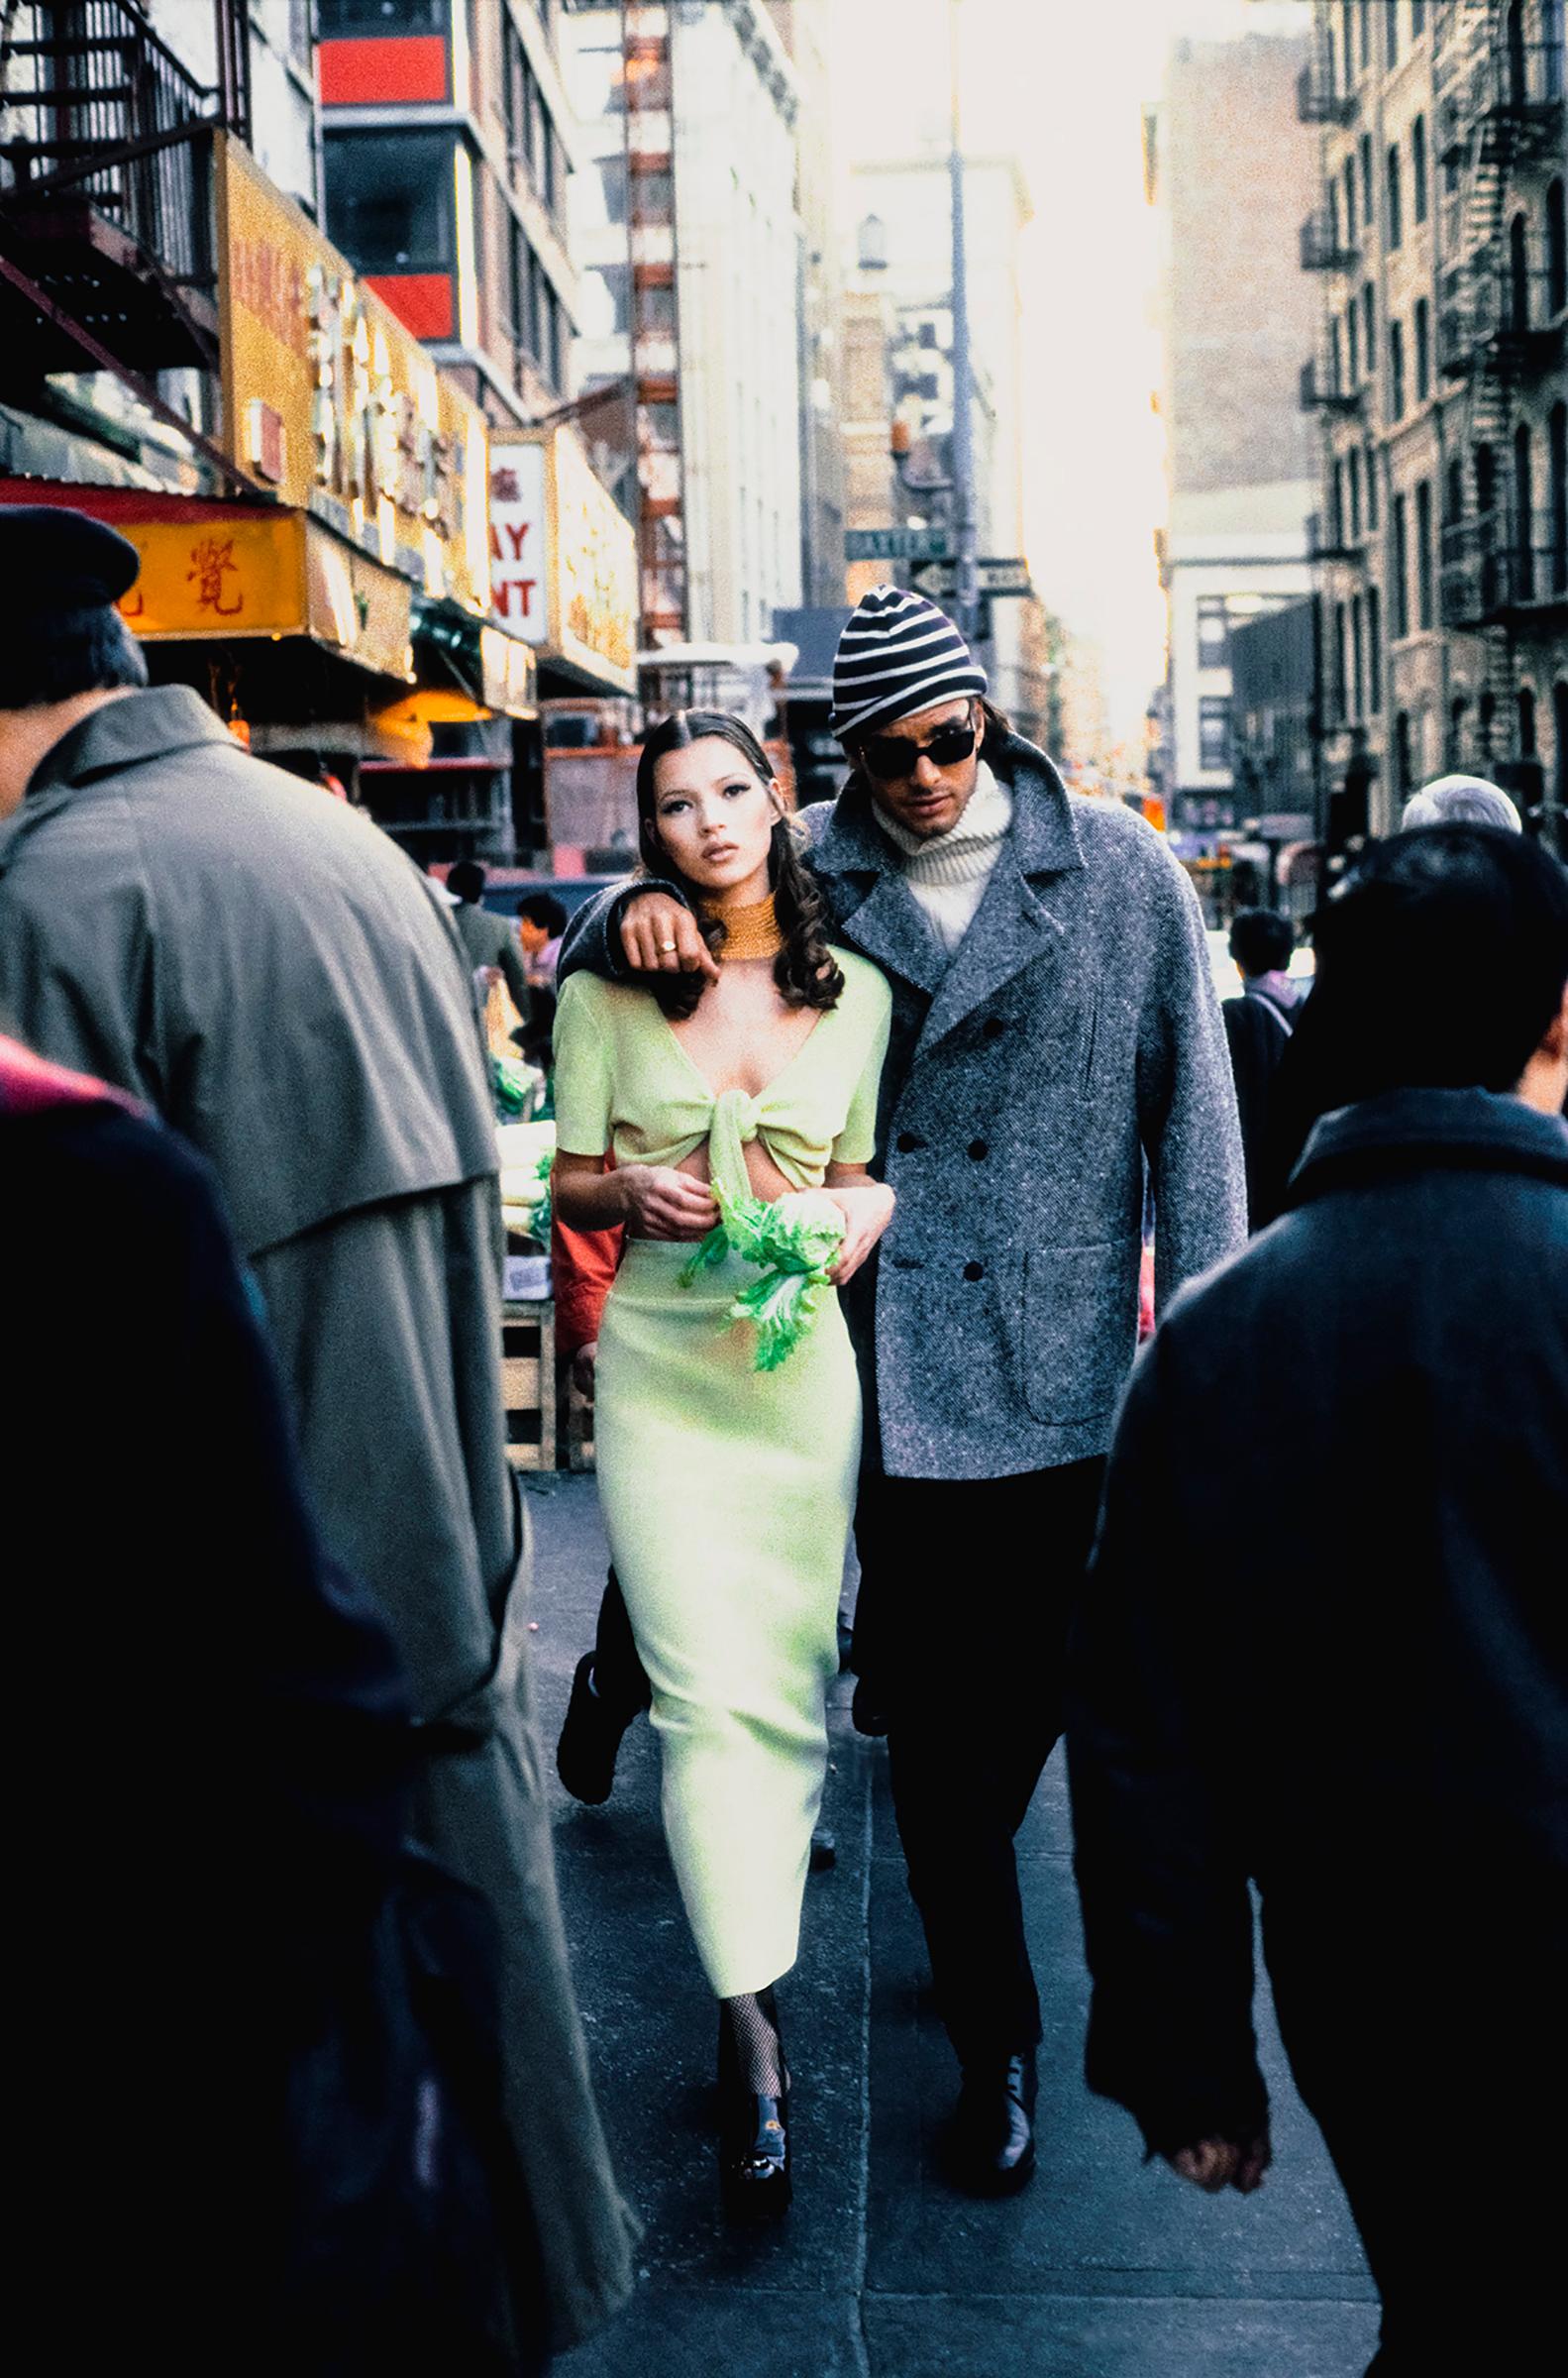 Stephanie Pfriender Stylander Black and White Photograph - Kate Moss + Marcus Schenkenberg, Visions, Harper’s Bazaar Uomo, New York